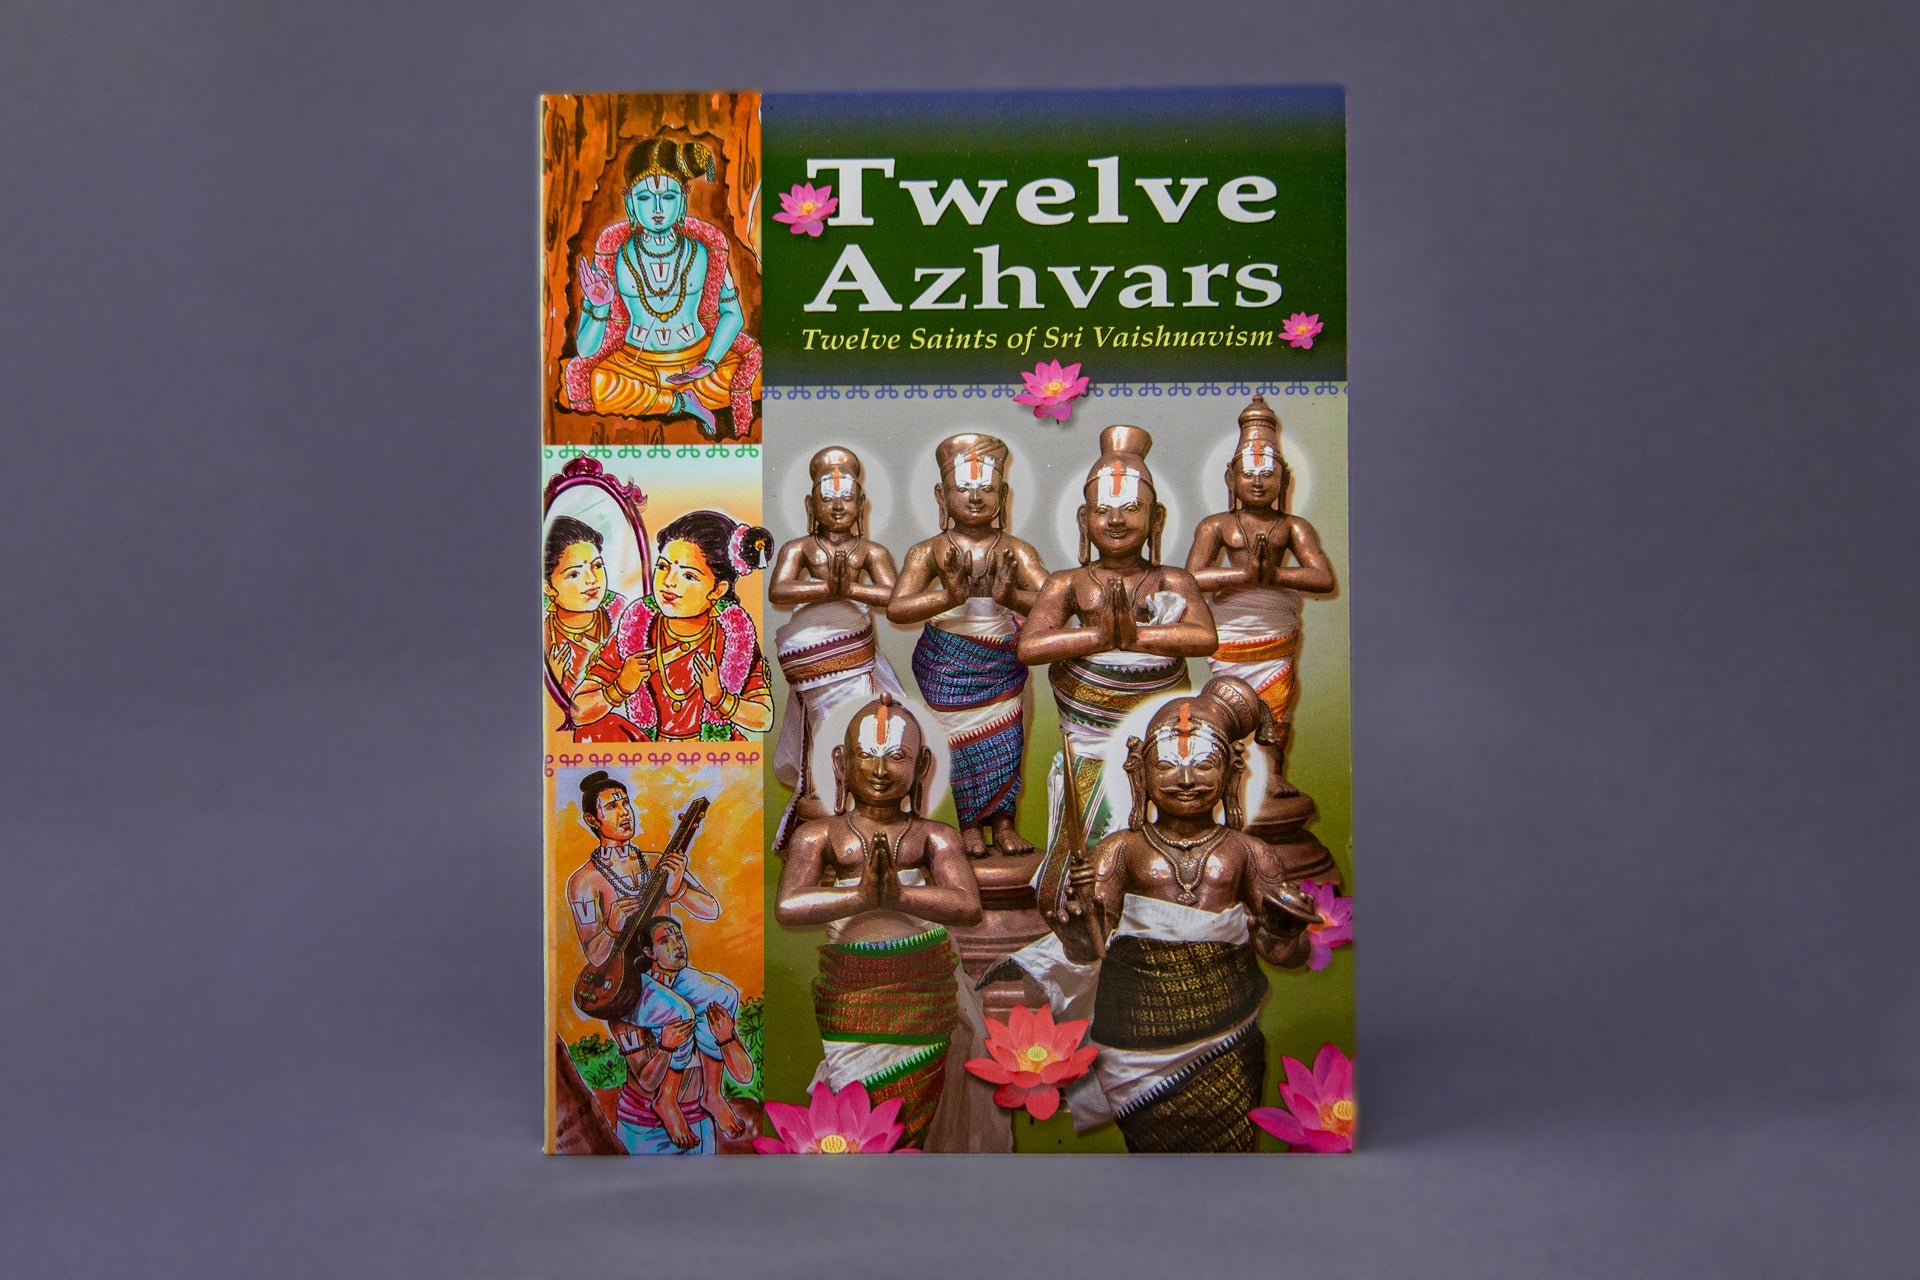 Twelve Azhvars. Twelve Saints of Sri Vaishnavism